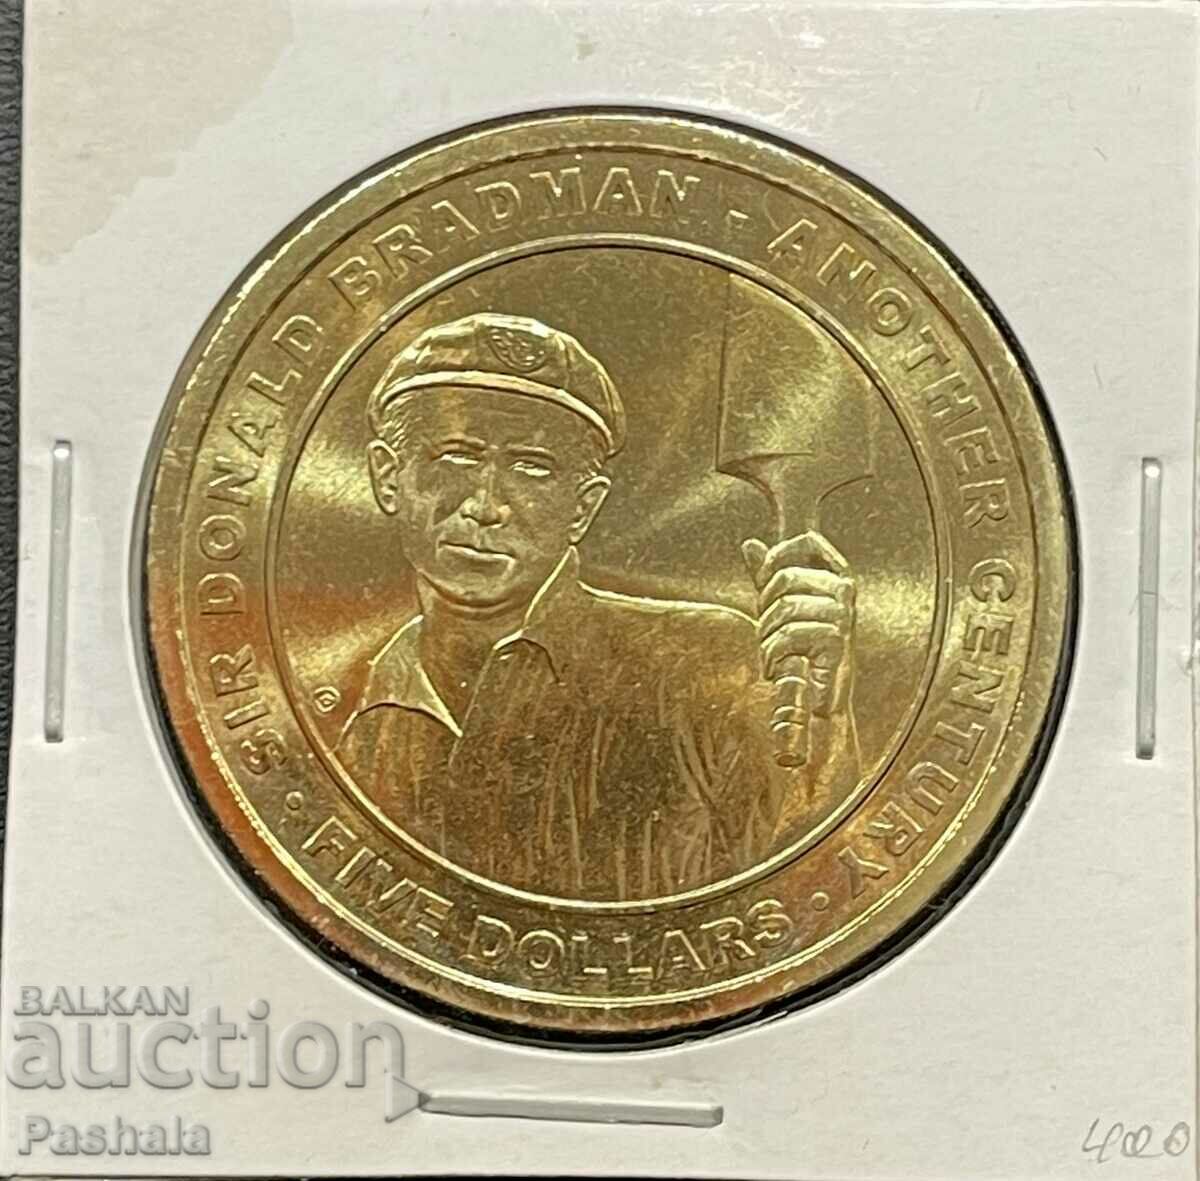 Australia 5 USD 2008